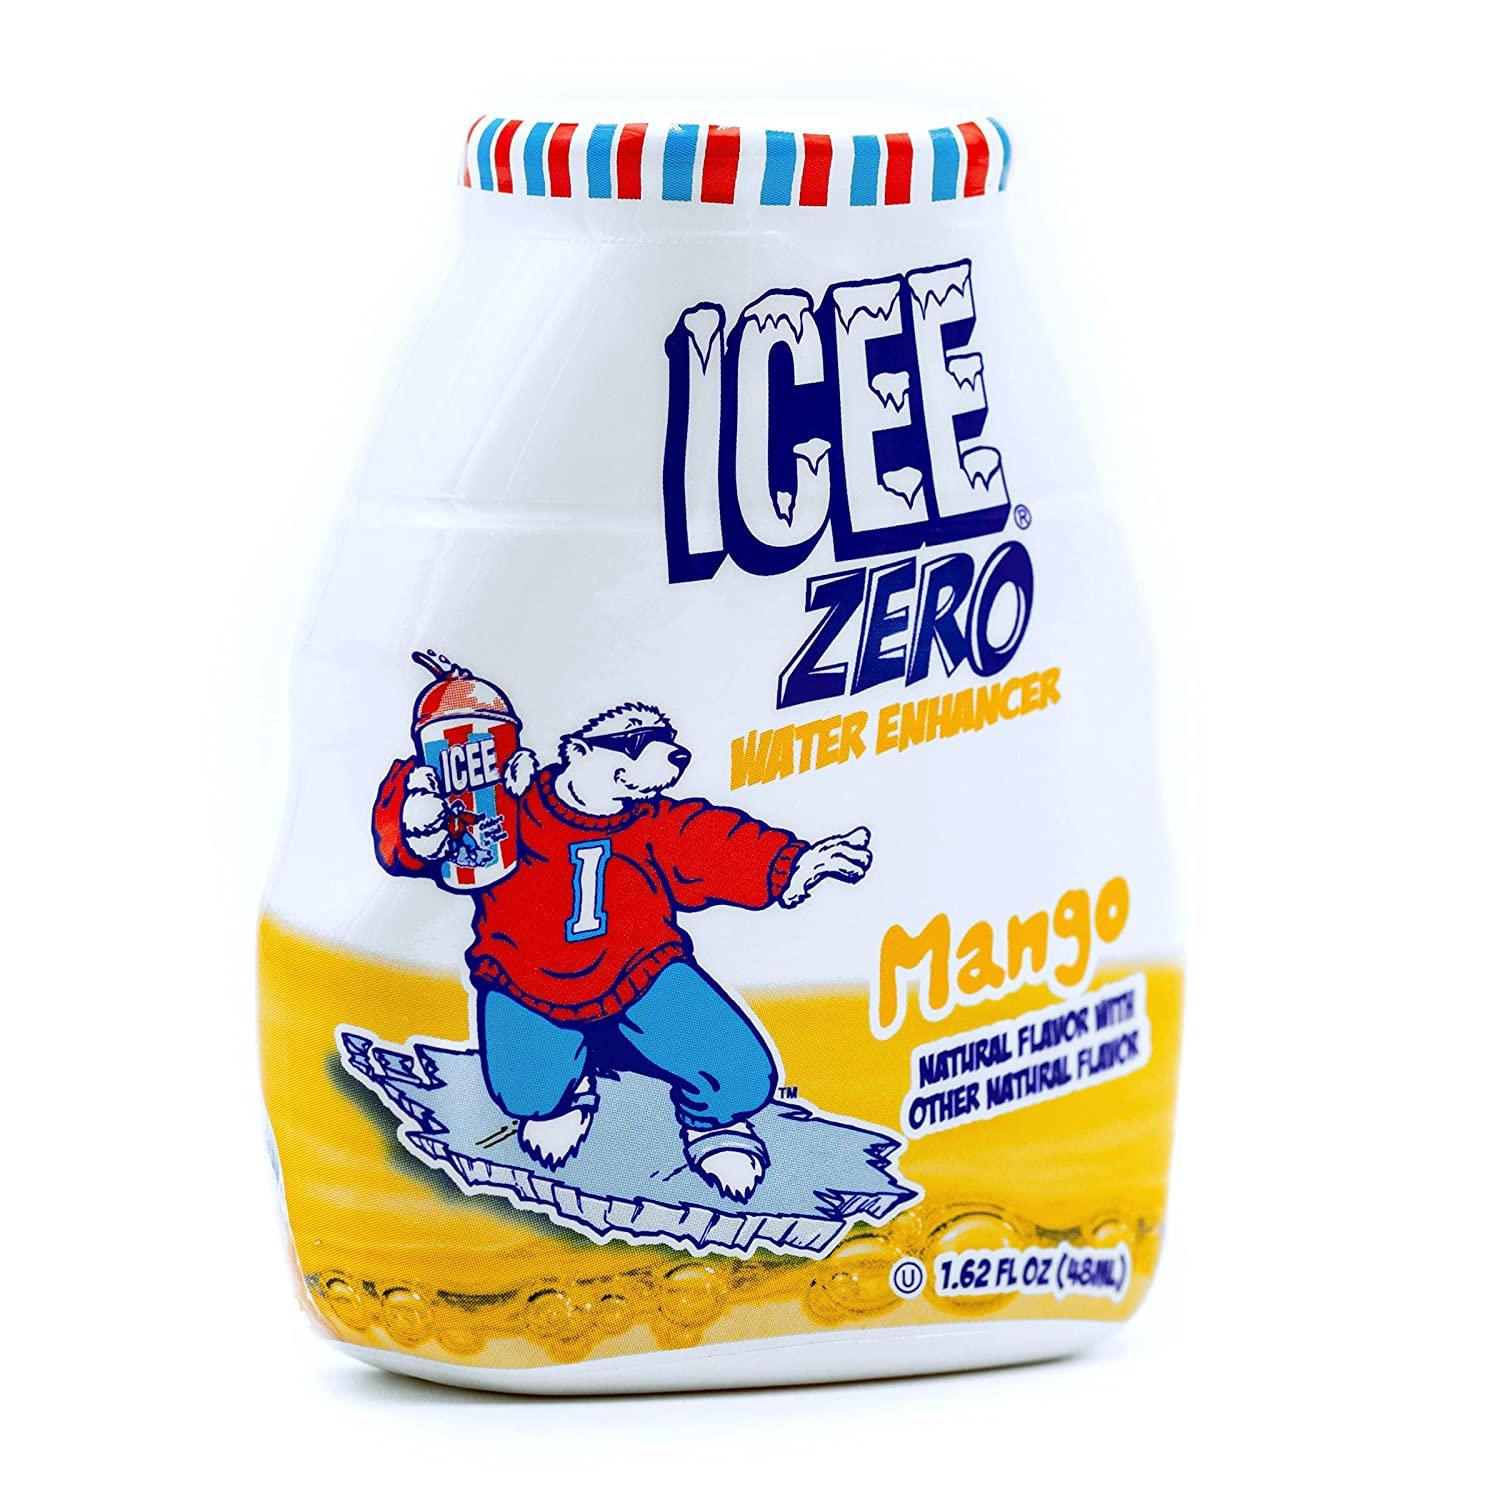 ICEE Freeze, Blue Raspberry - 4 pack, 4 fl oz cups